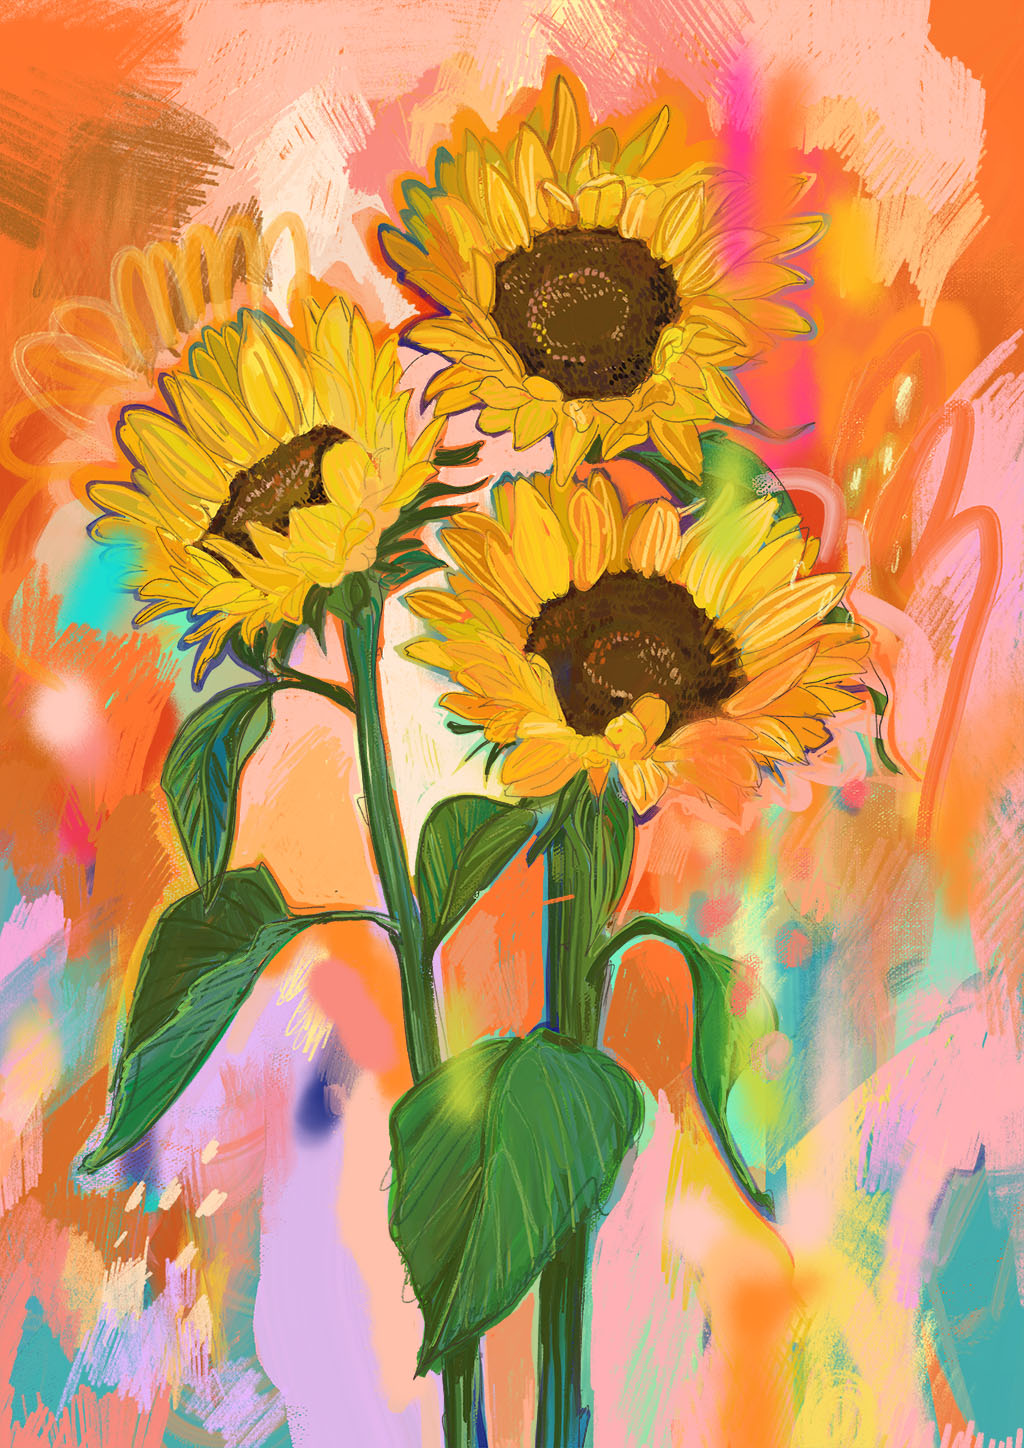 x9139 Chromatose Botanica - Sunflowers 